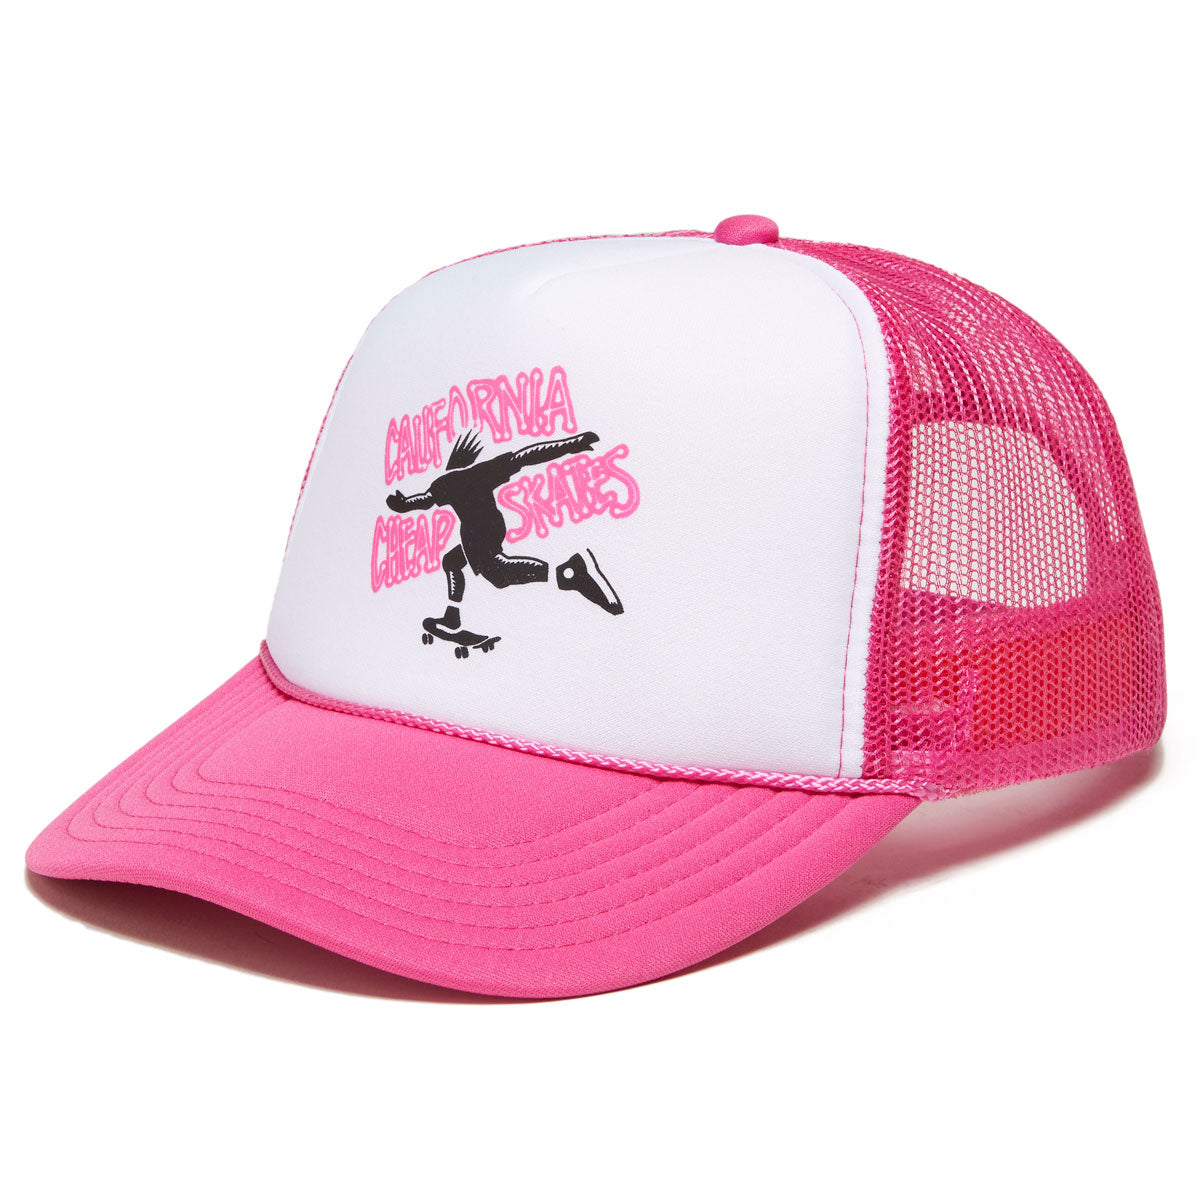 CCS Cheapskates Mesh Trucker Hat - Hot Pink/White/Black image 1